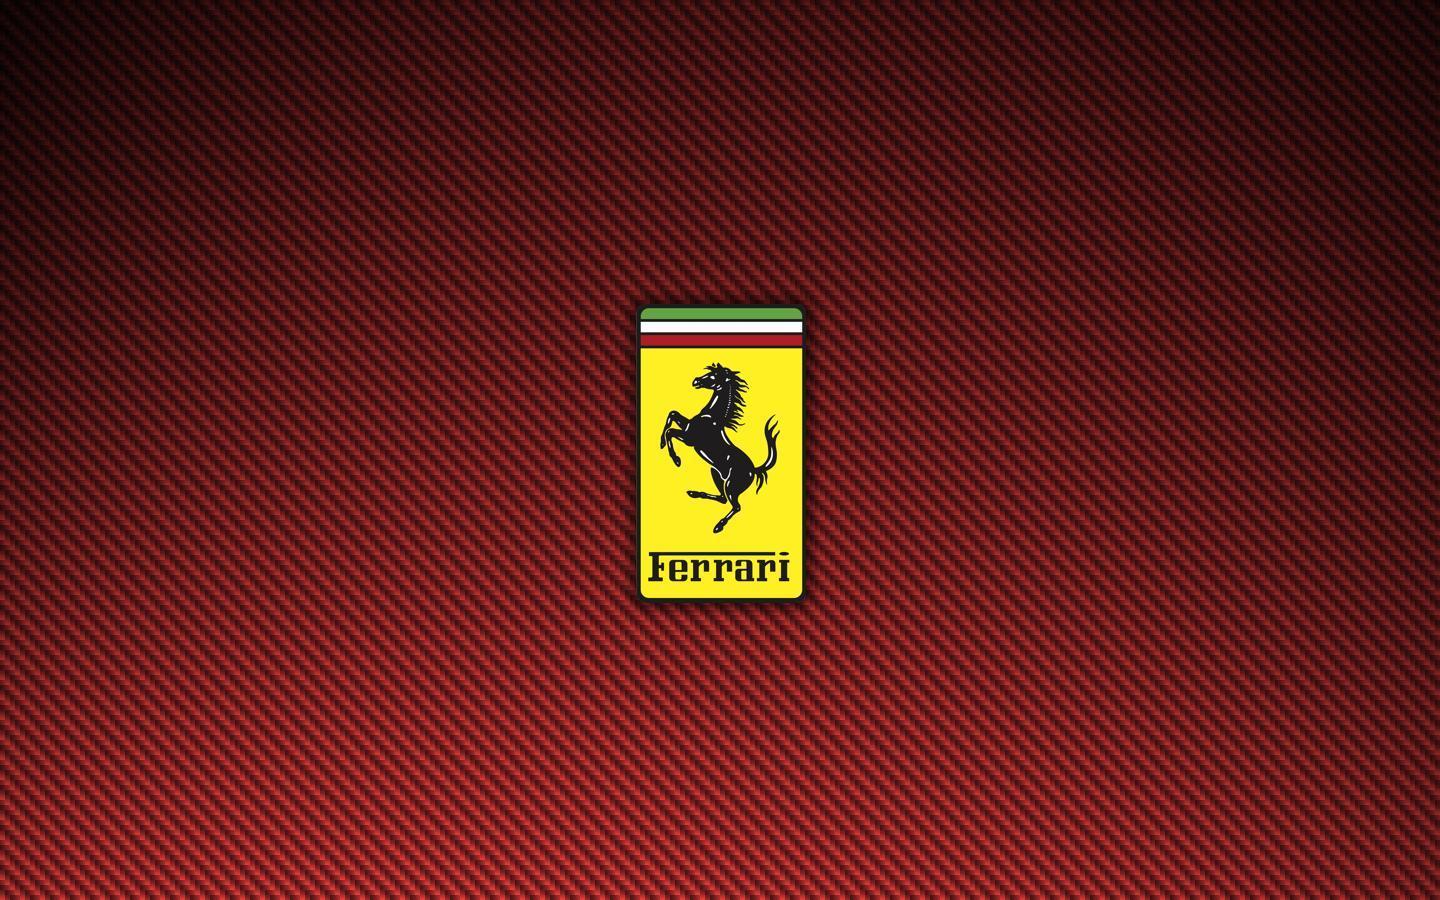 Ferrari Logo Wallpaper 4304 Hd Wallpapers in Logos   Imagescicom 1440x900